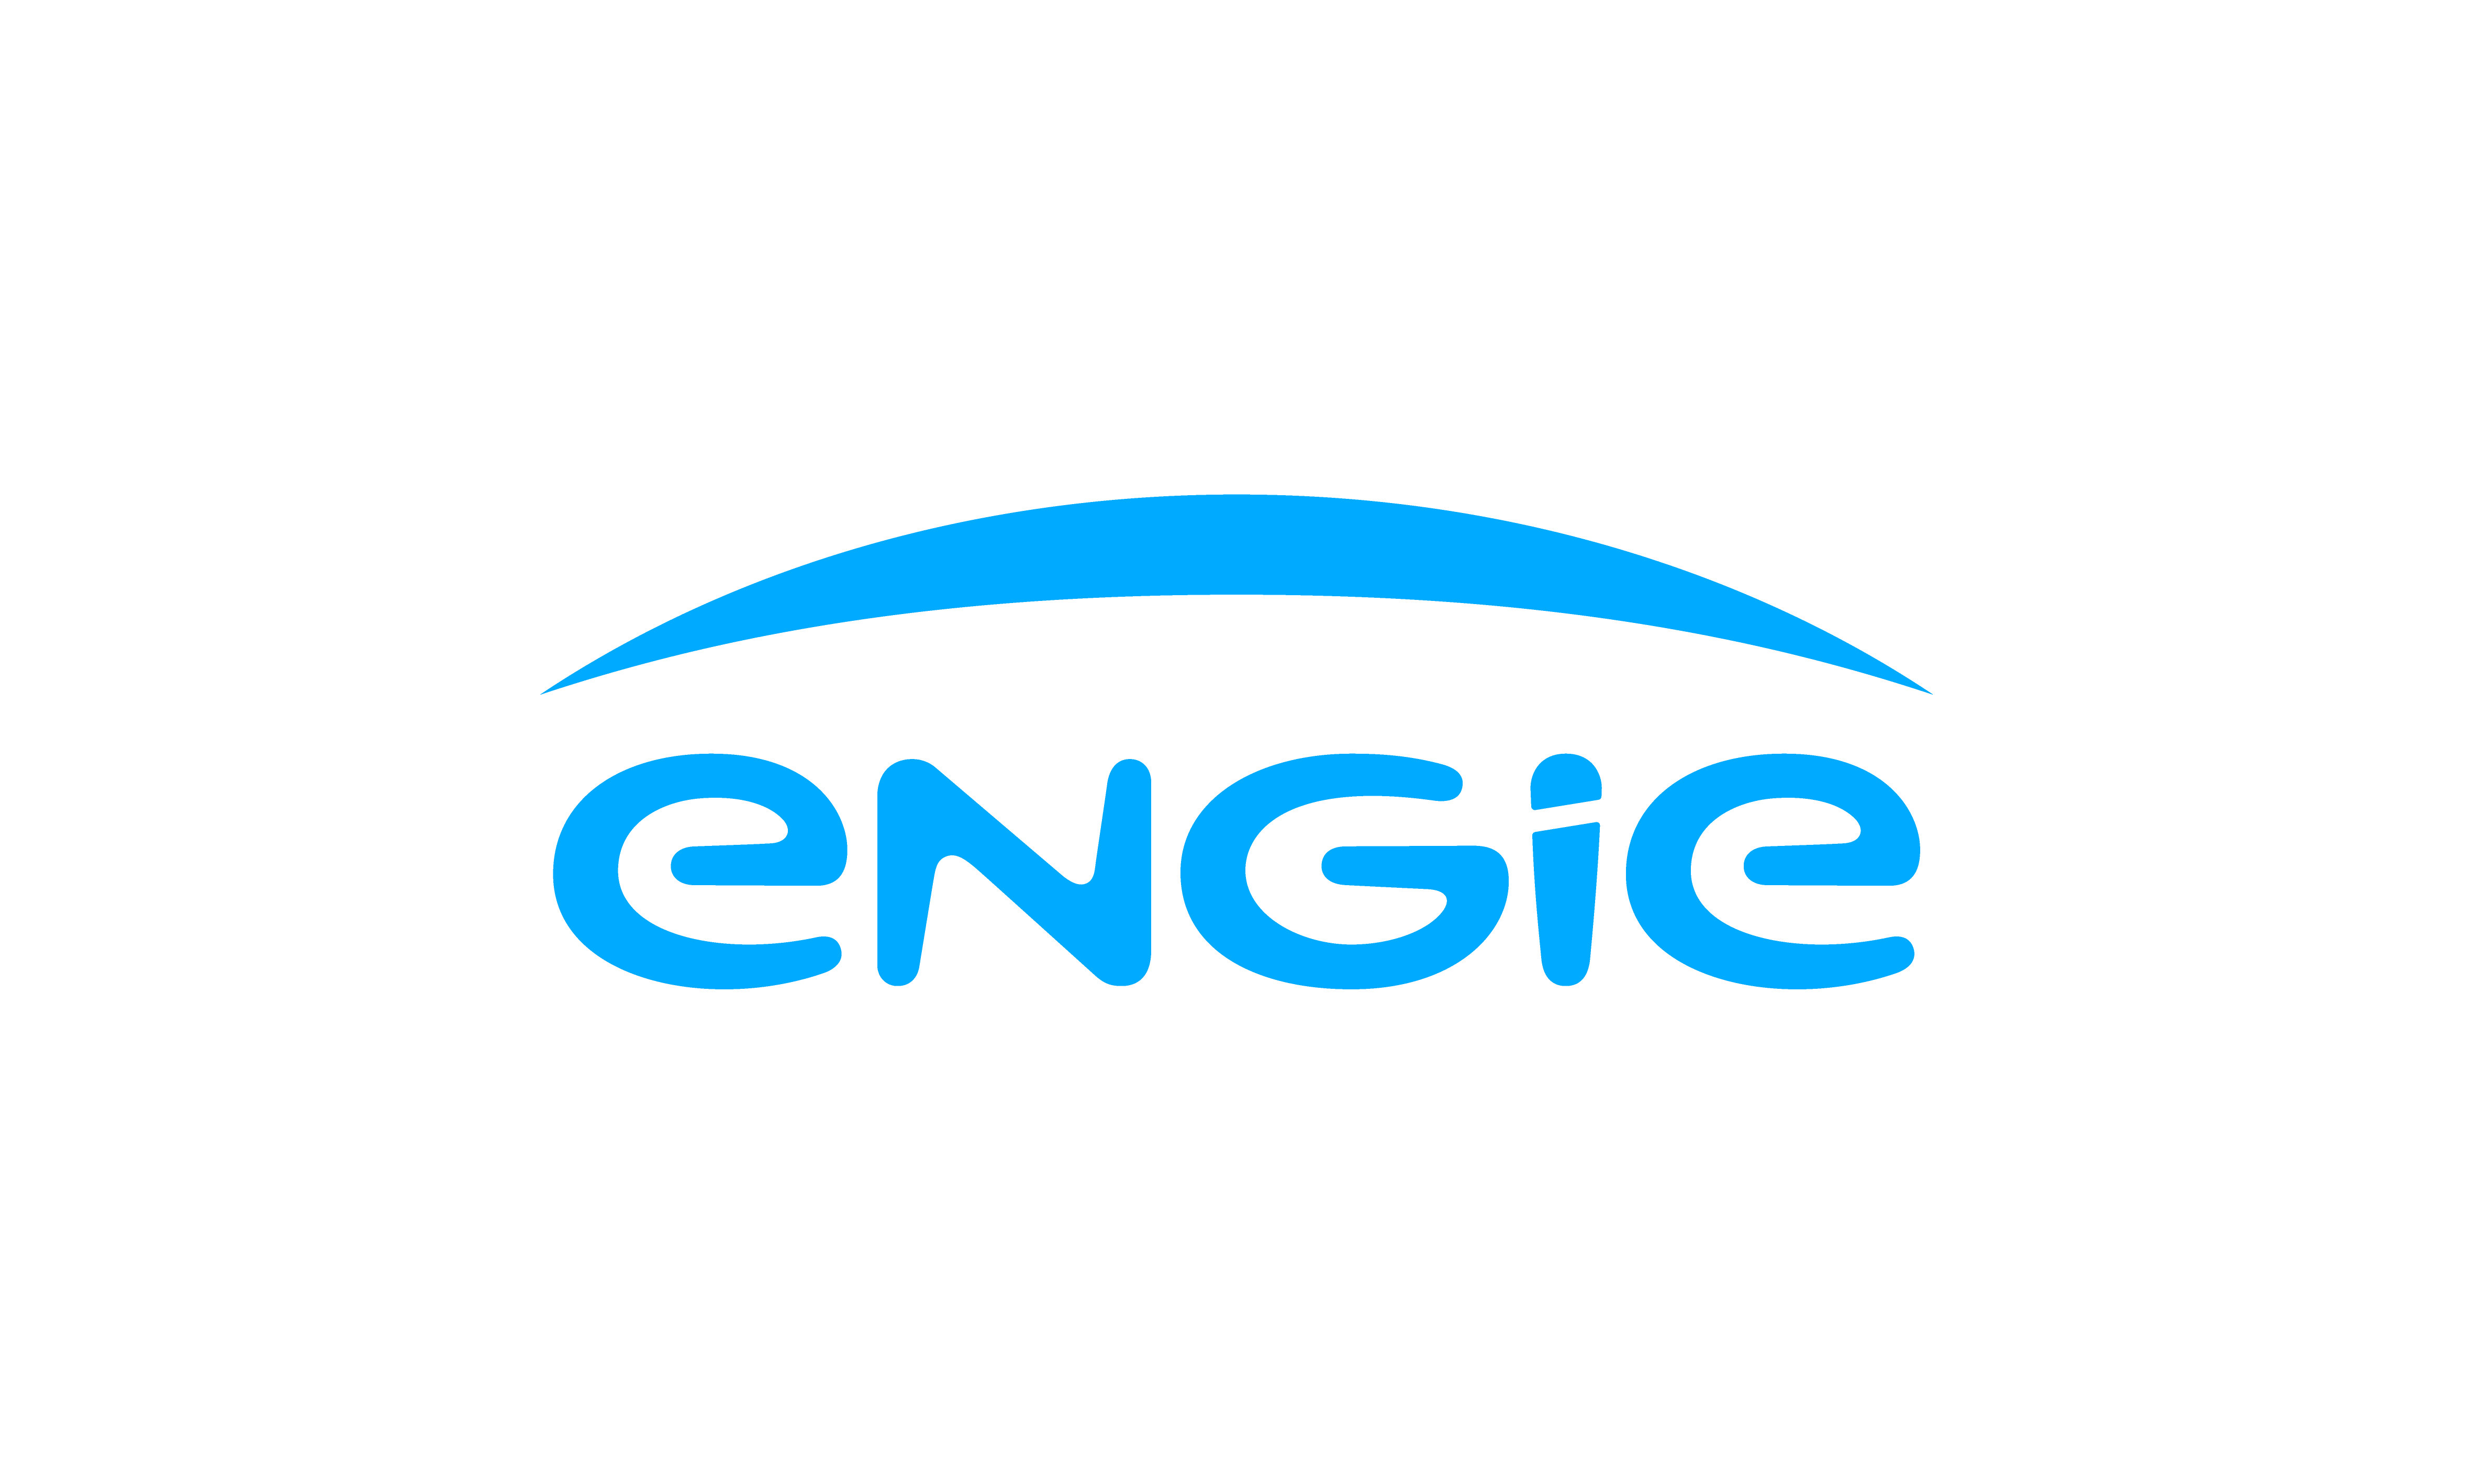 Engie Logotype Solid Blue Rgbengie Logotype Solid Blue Rgb